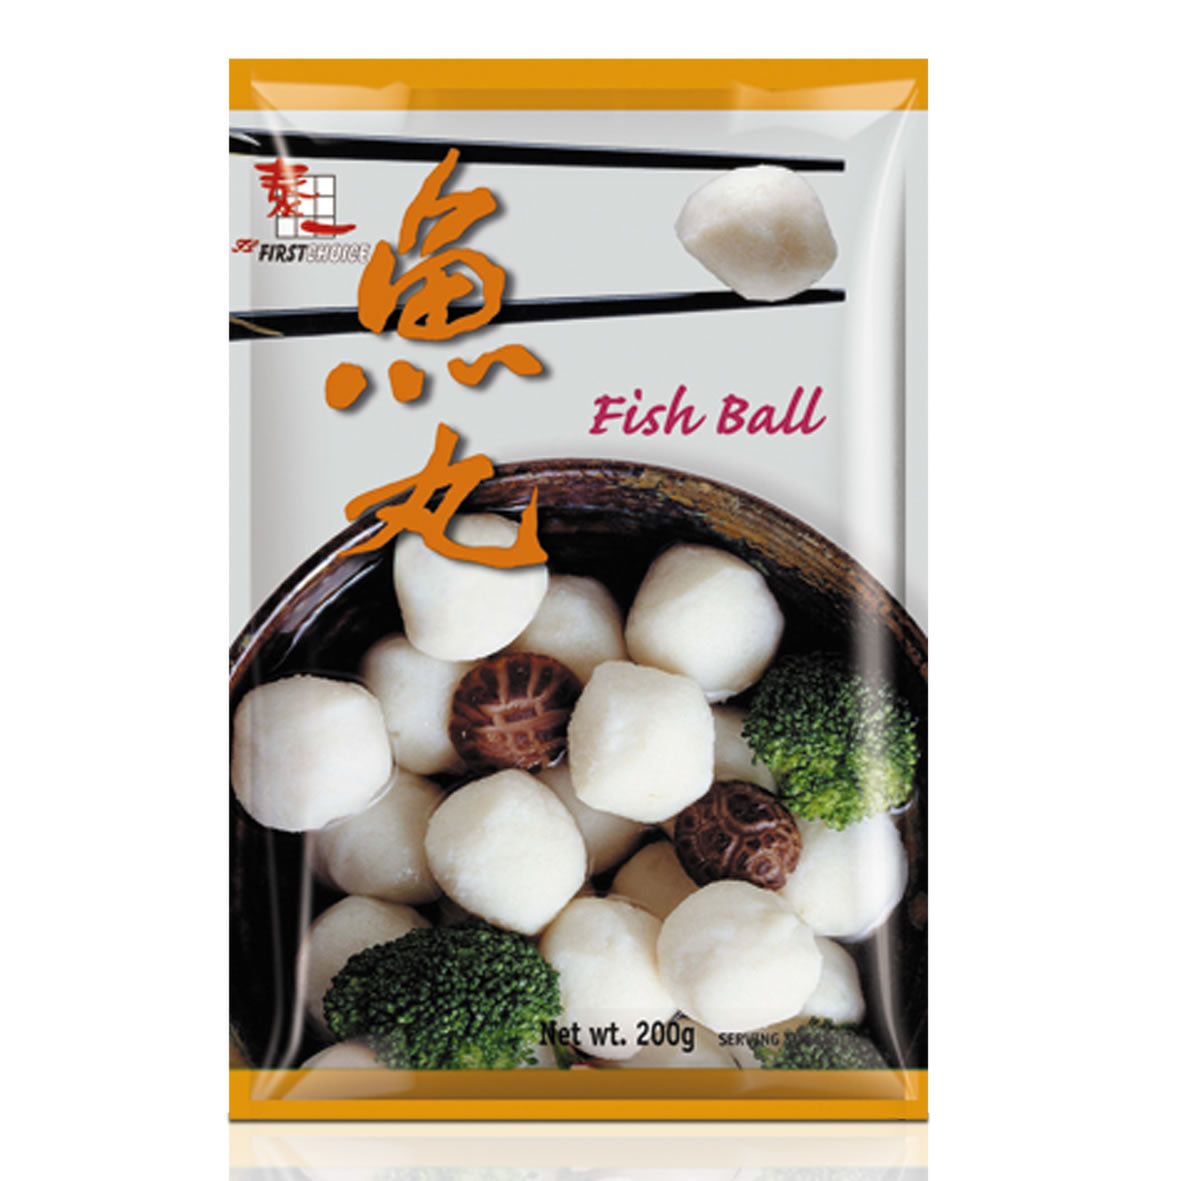 First Choice Fish Balls 200g